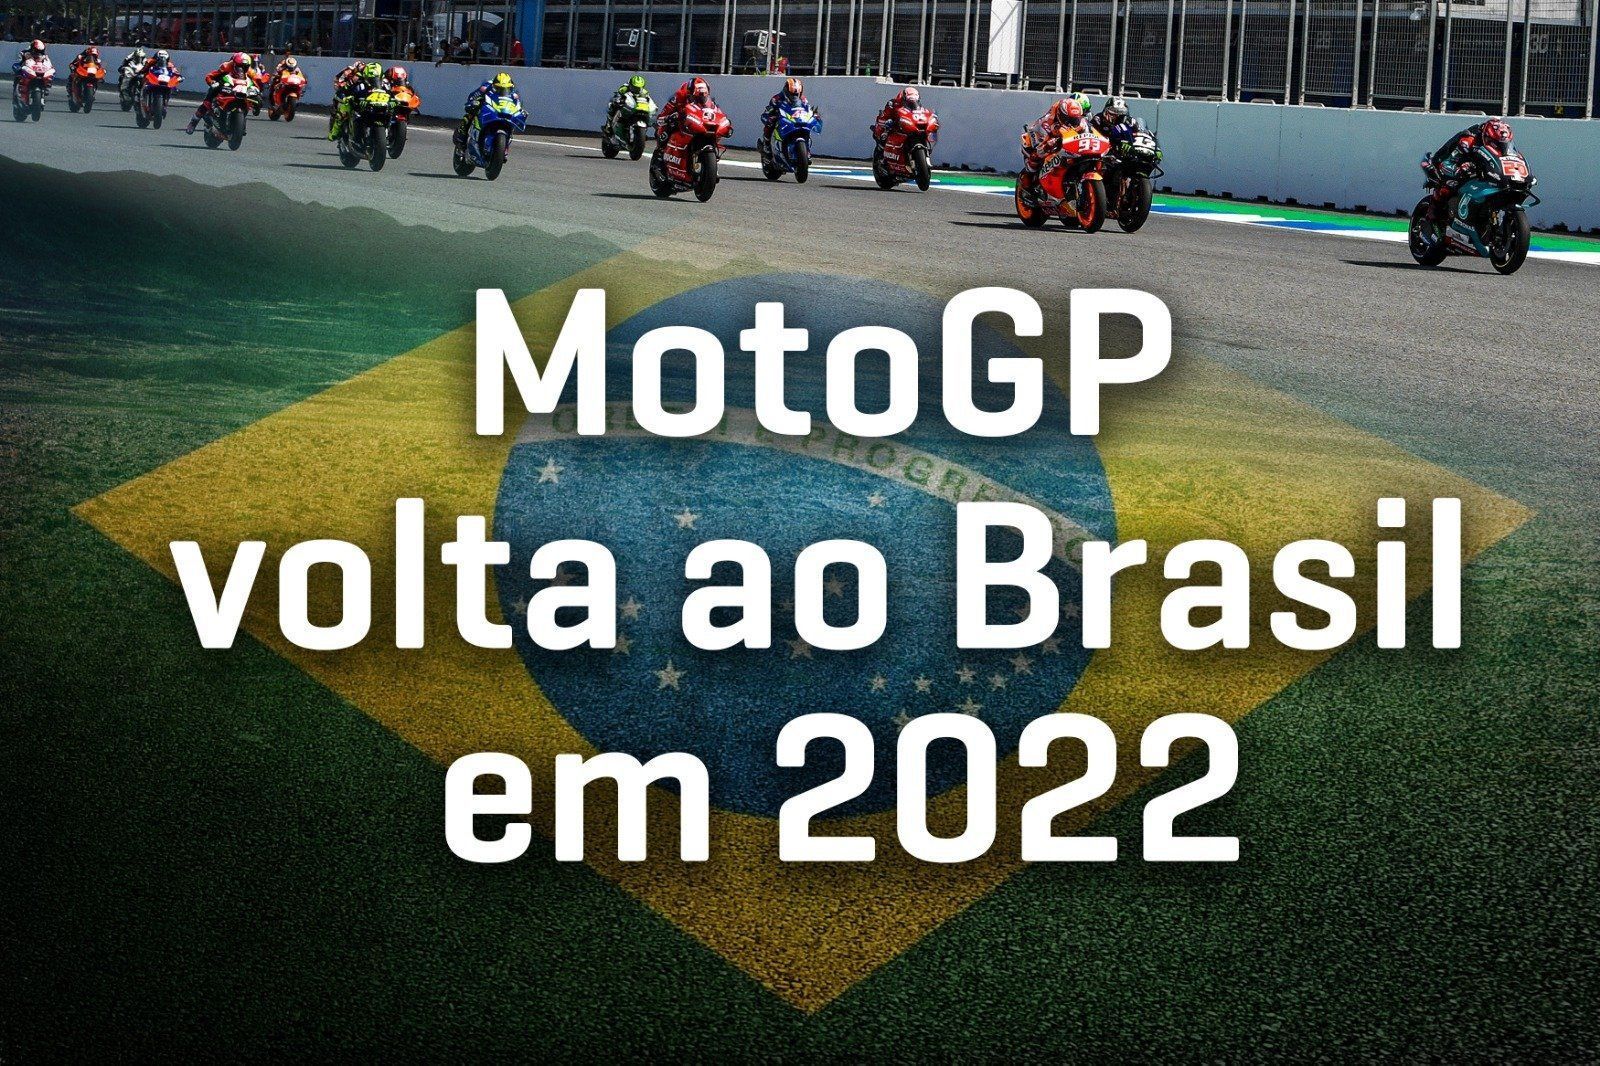 MotoGP, Brazil